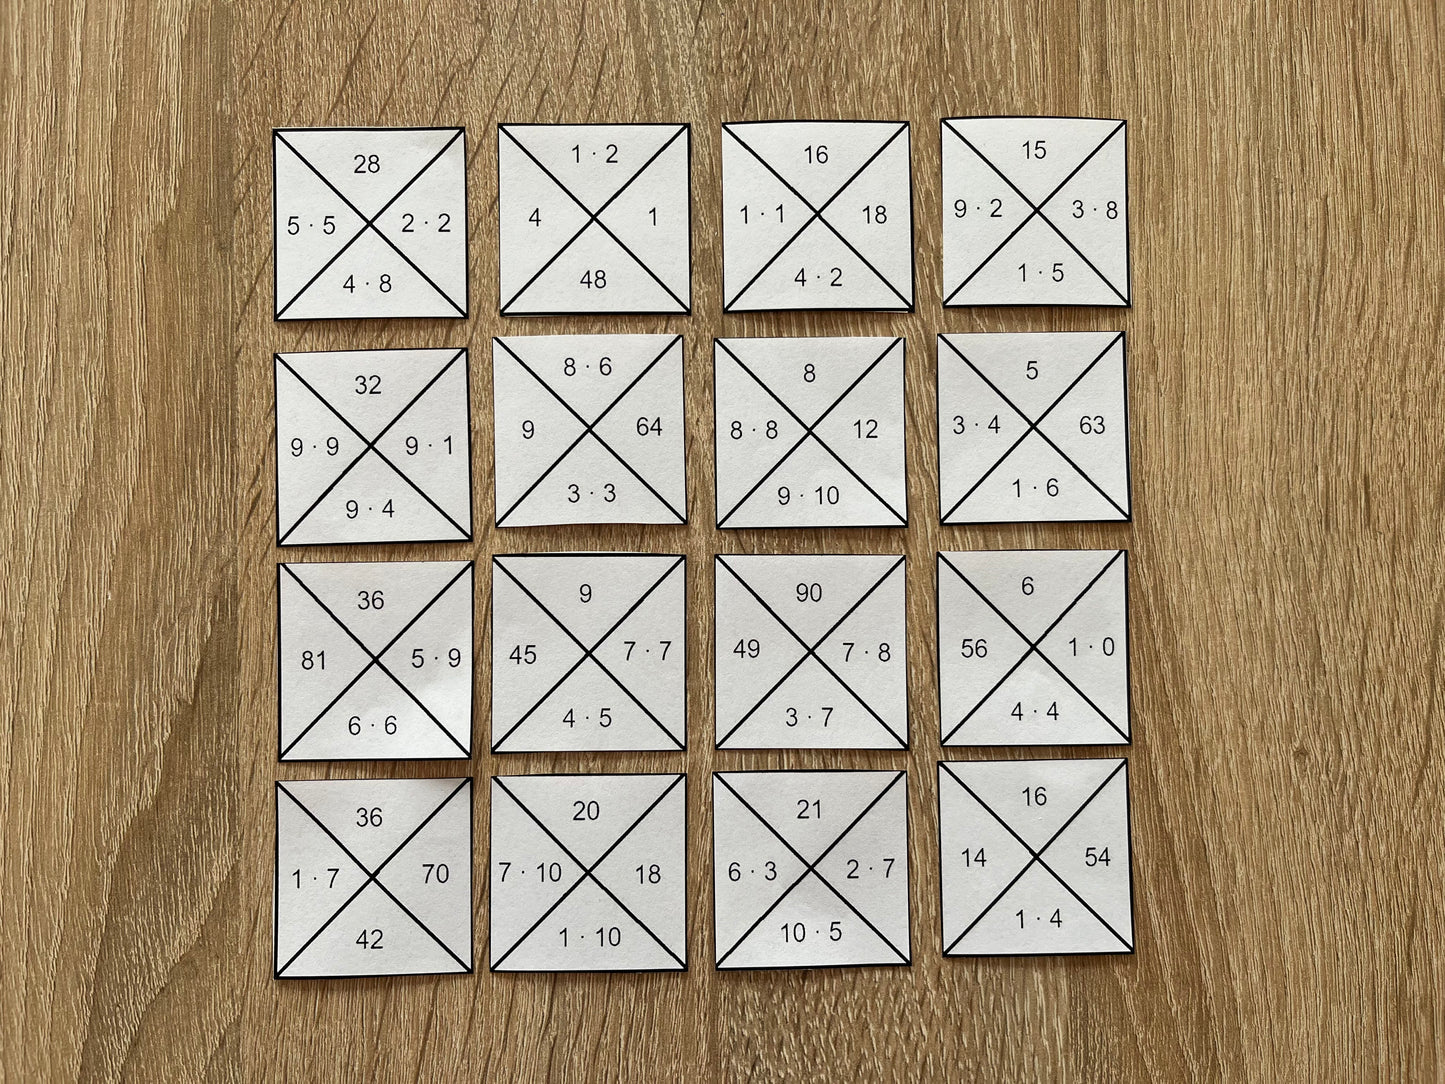 Kvadromino - matematické puzzle